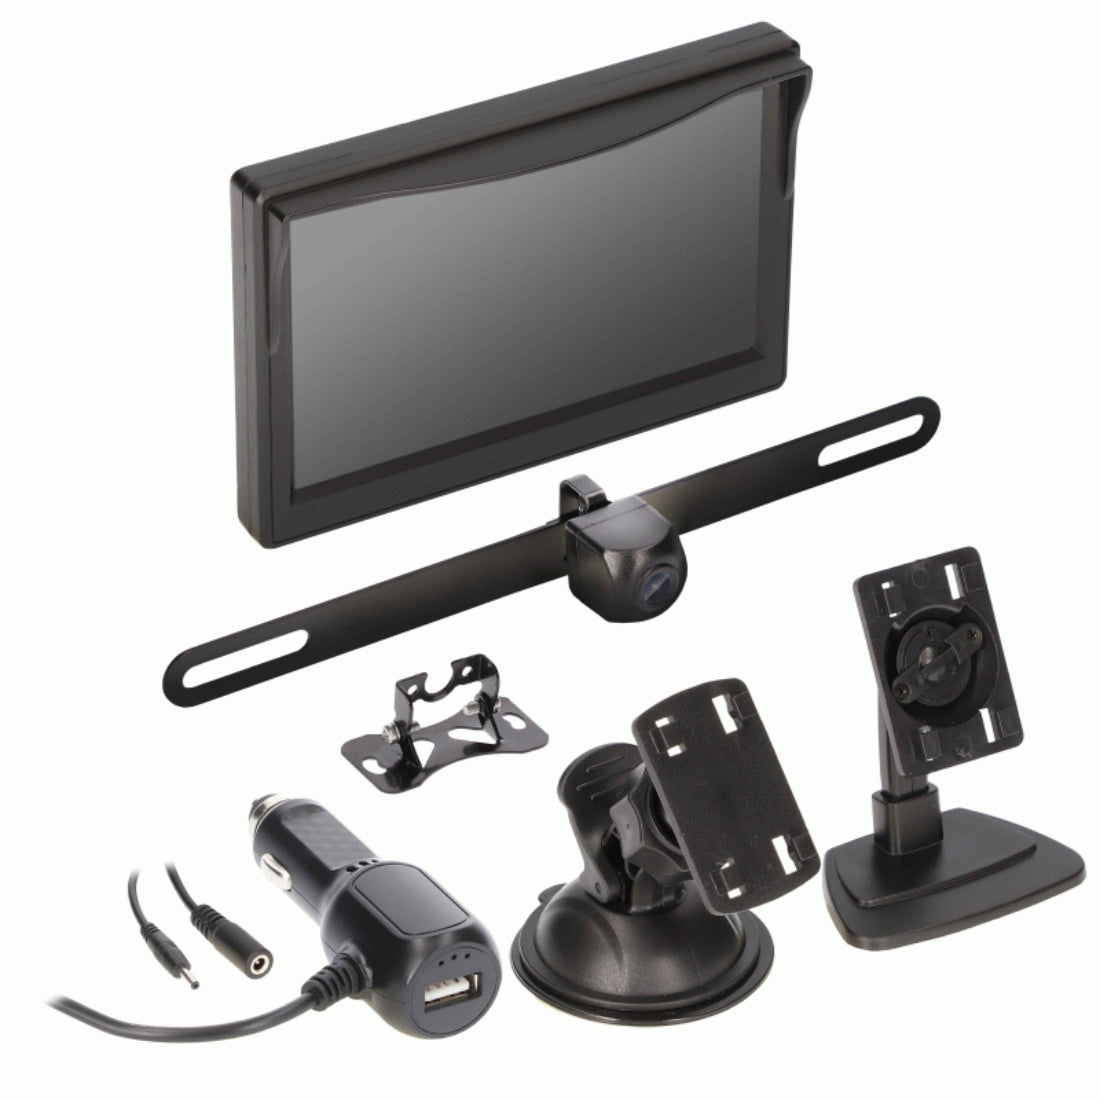 iBeam TE-WKMN5 5" LCD Wireless Monitor and Back-Up Camera Kit - 20m / 65ft Range